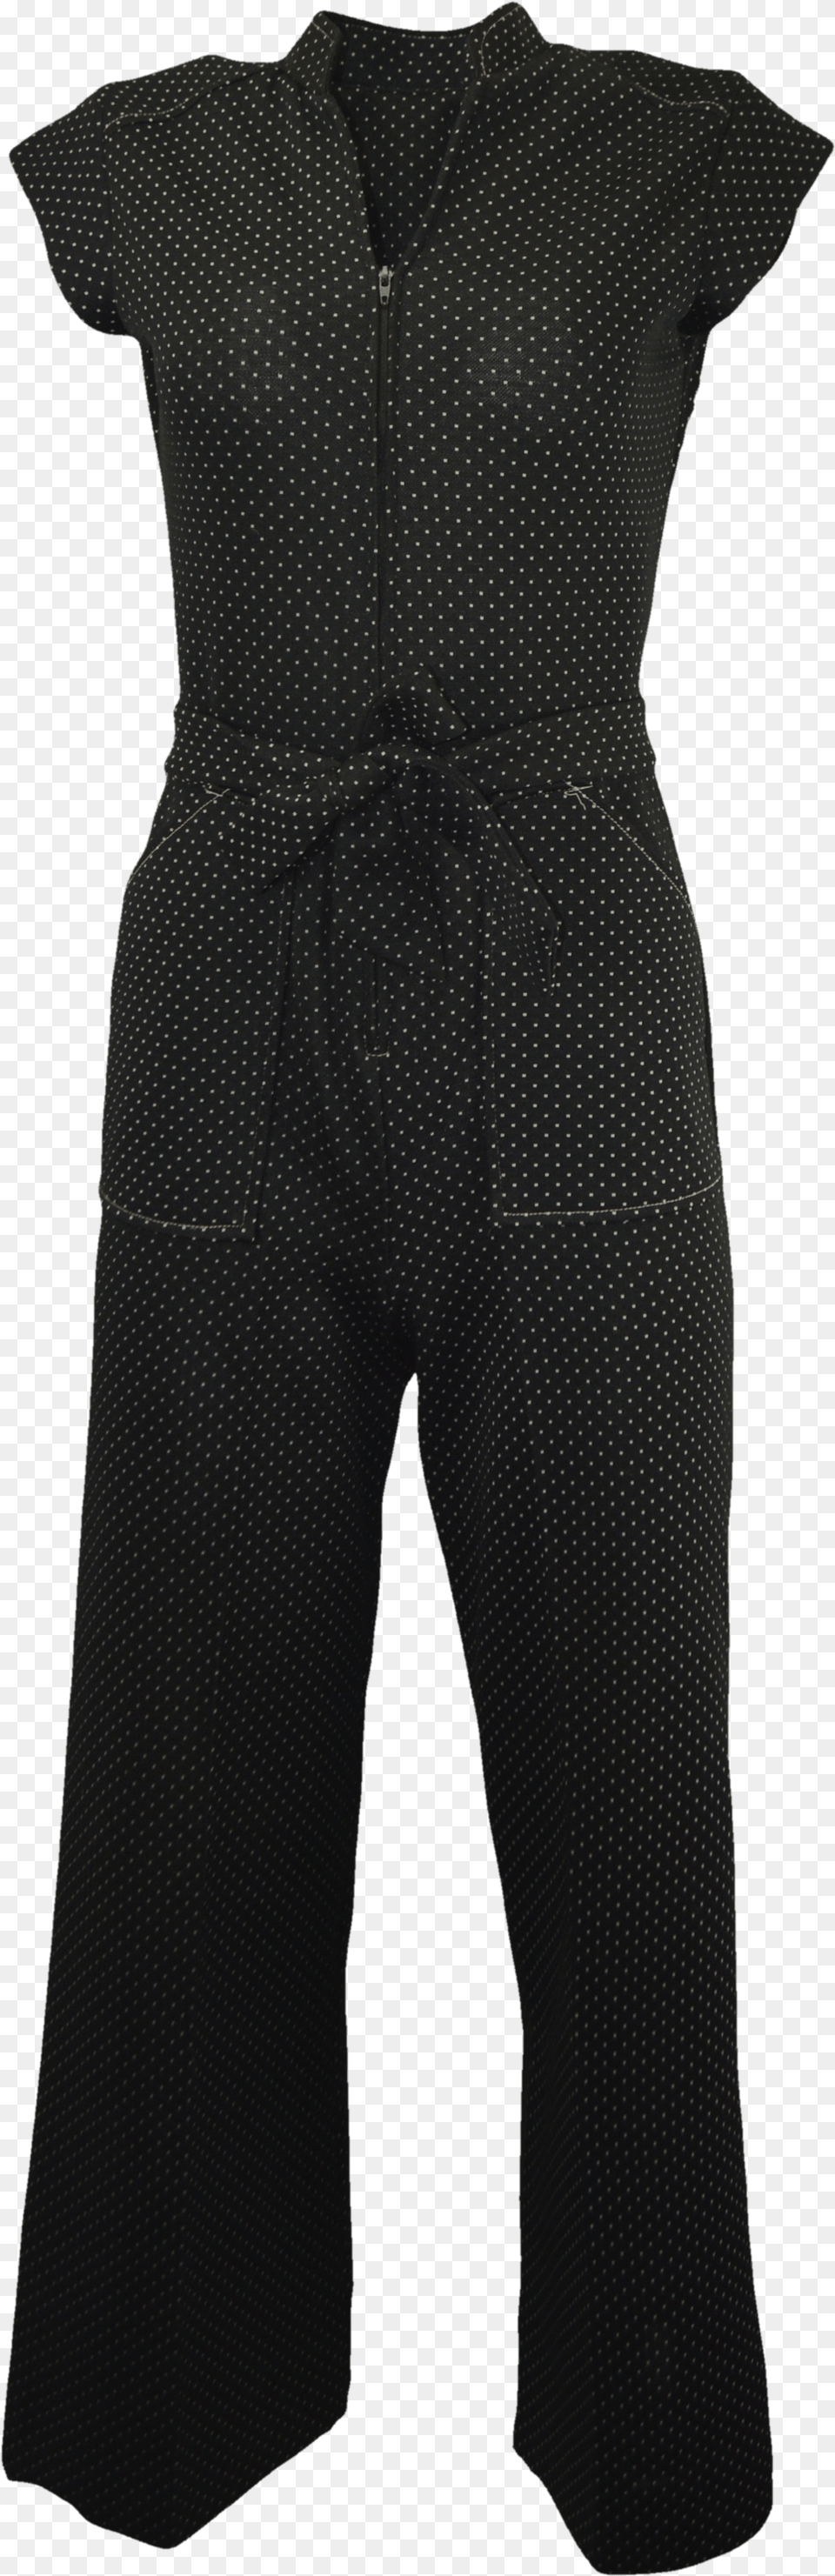 Polka Dot, Clothing, Coat, Armor, Pants Png Image